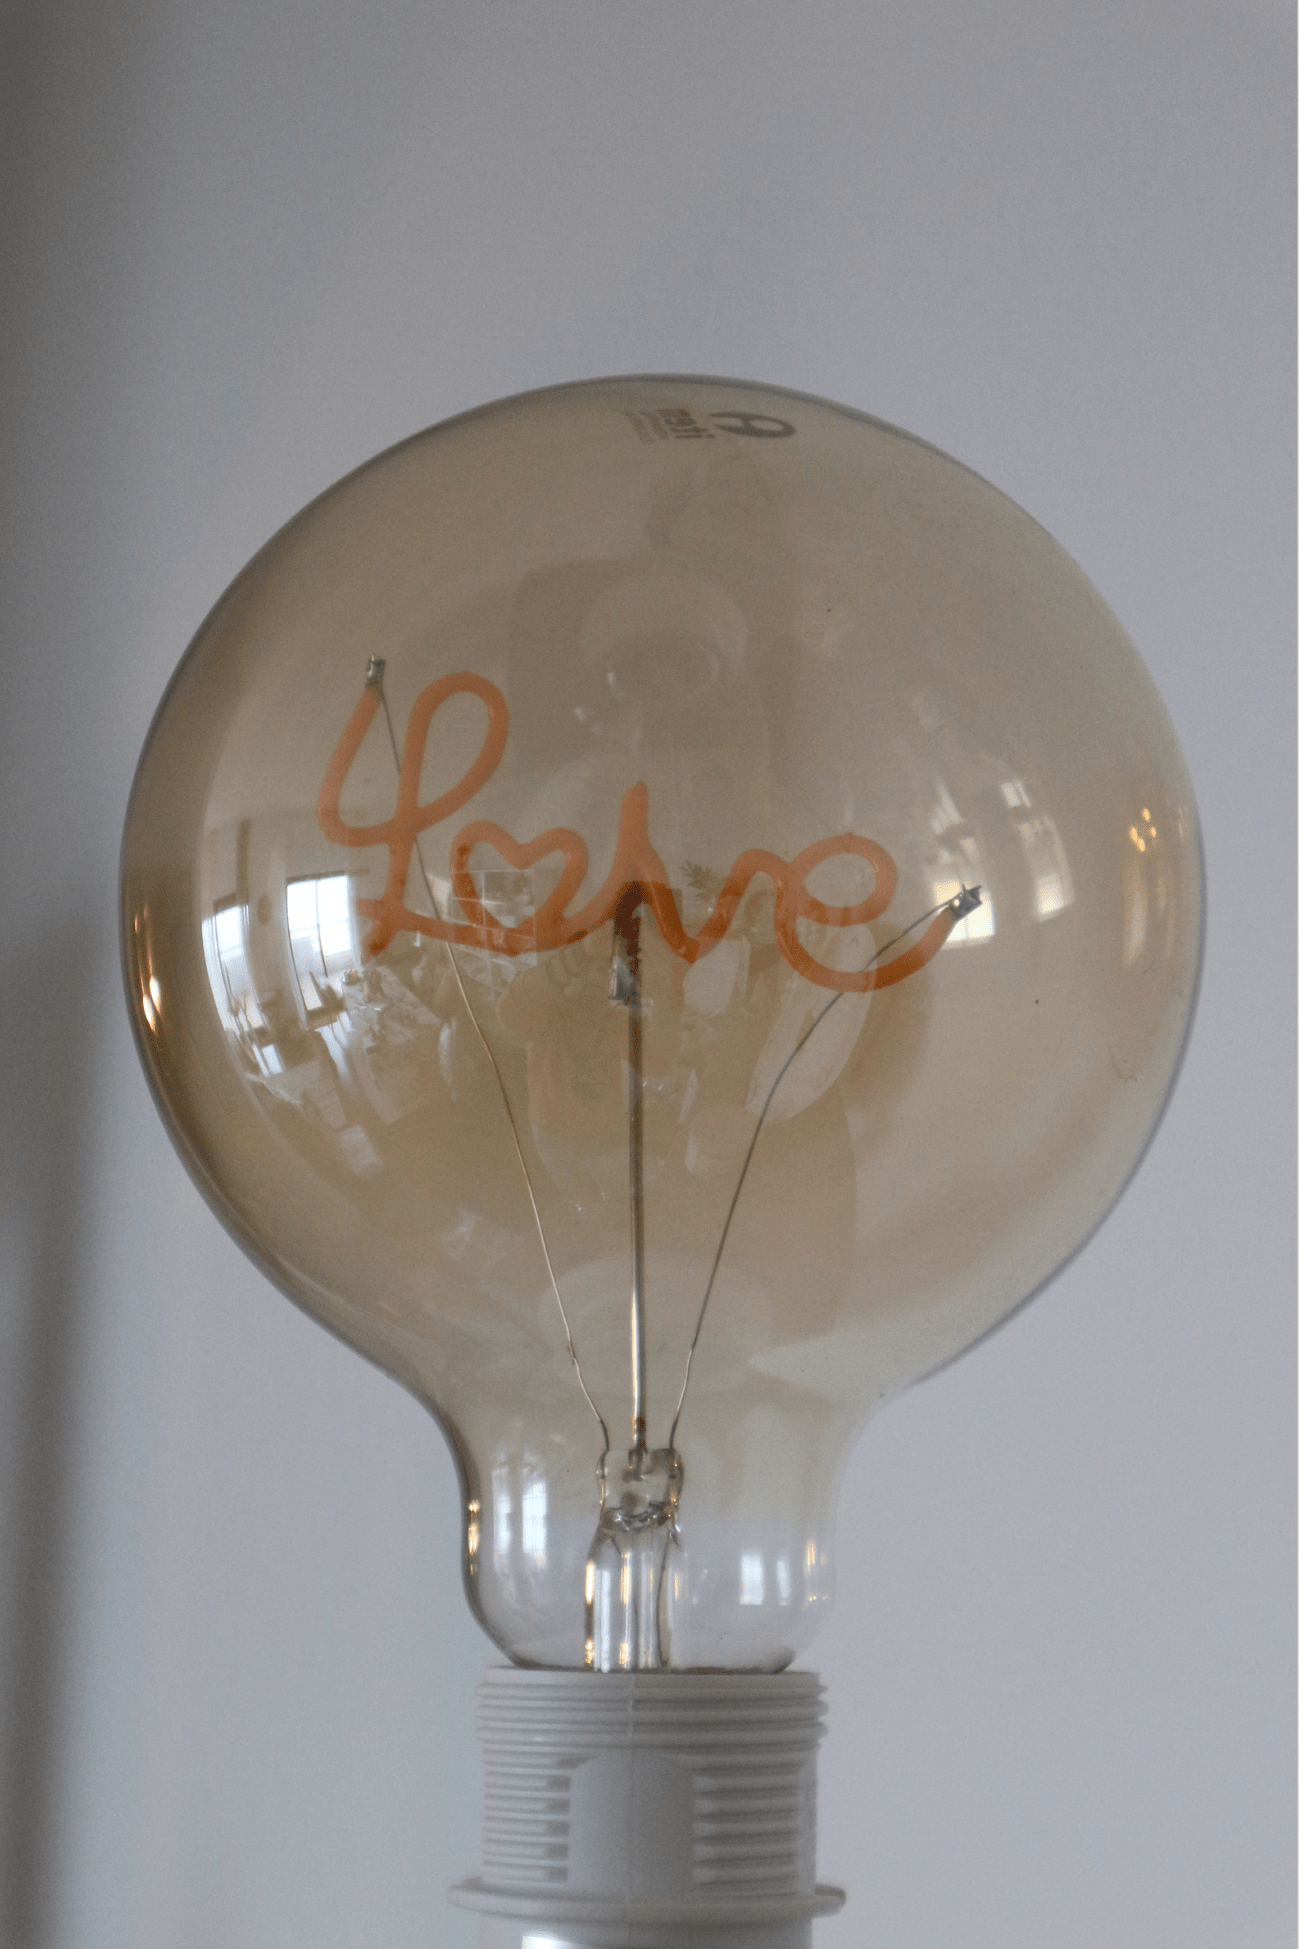 Item International Lamp Lamp - Love - Lampadina E27 con scritta | Item International